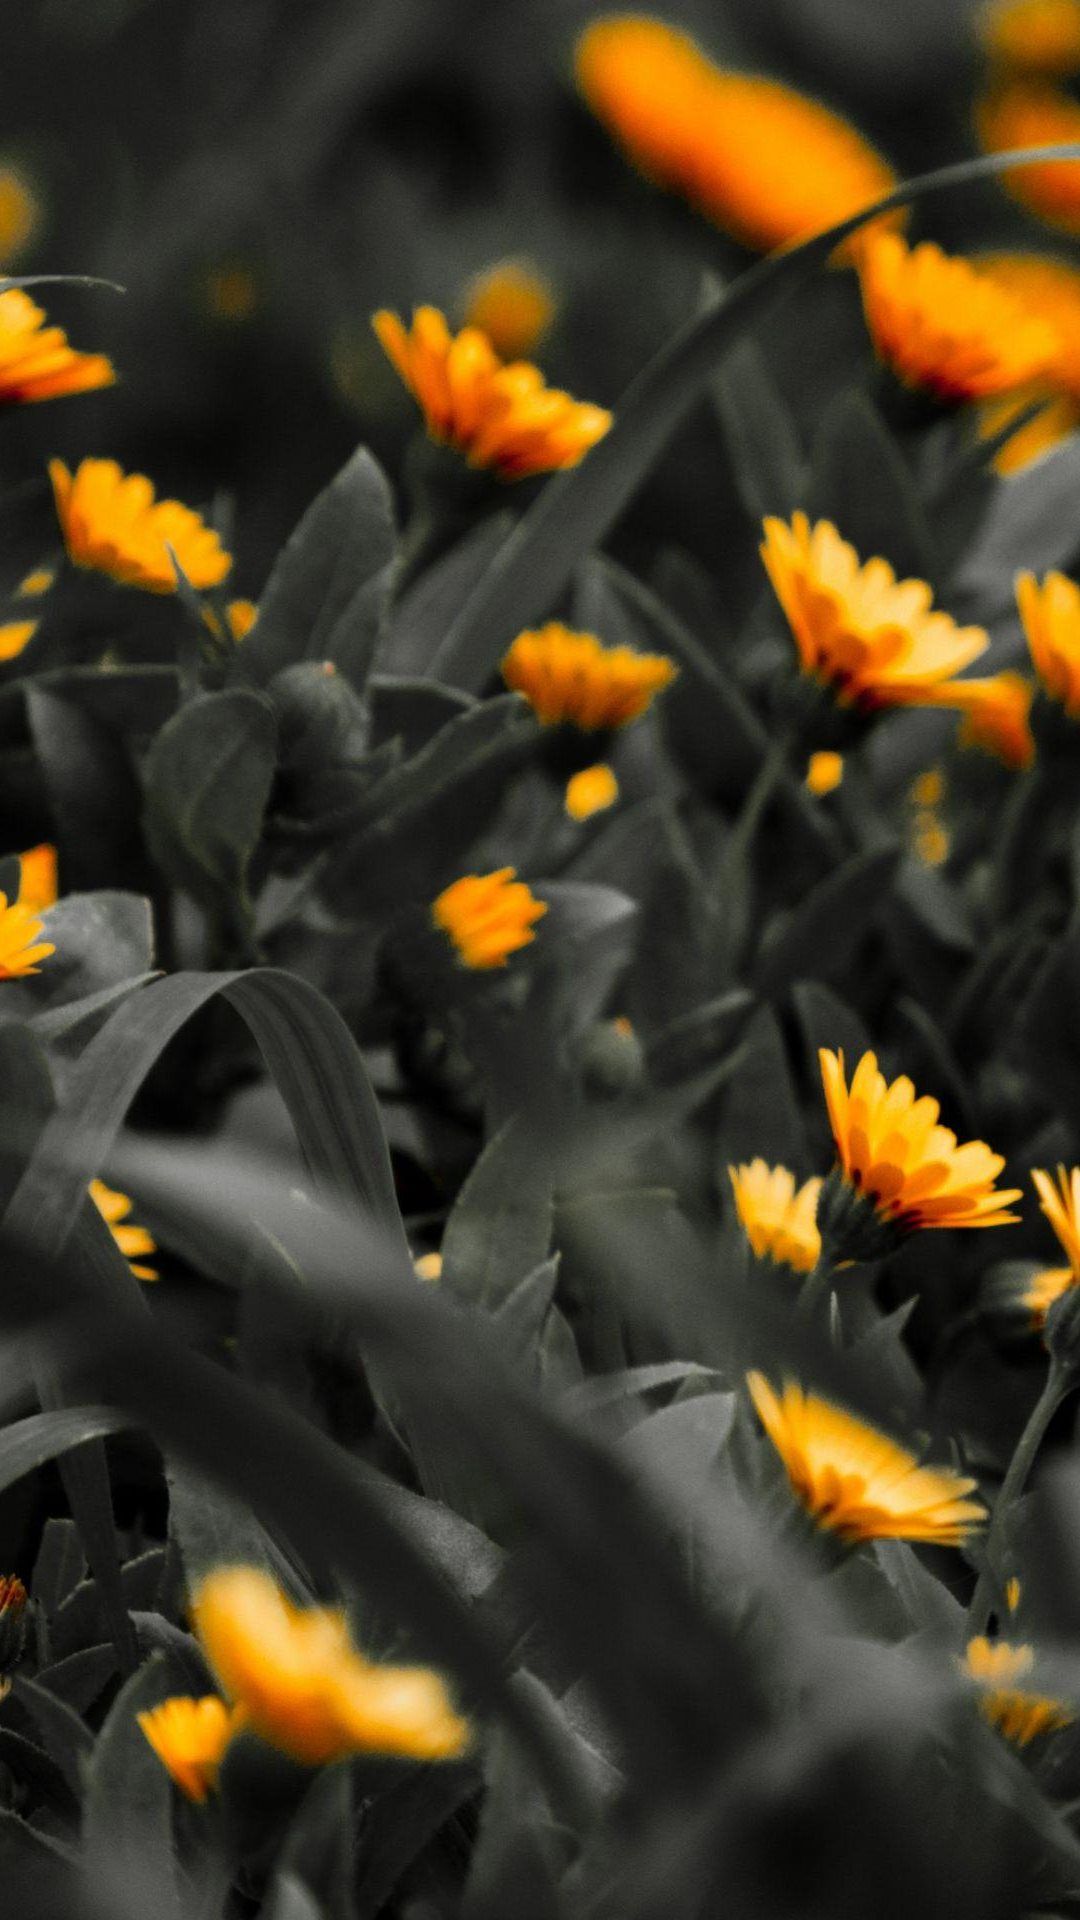 black wallpaper hd for mobile free download,flower,yellow,plant,petal,orange